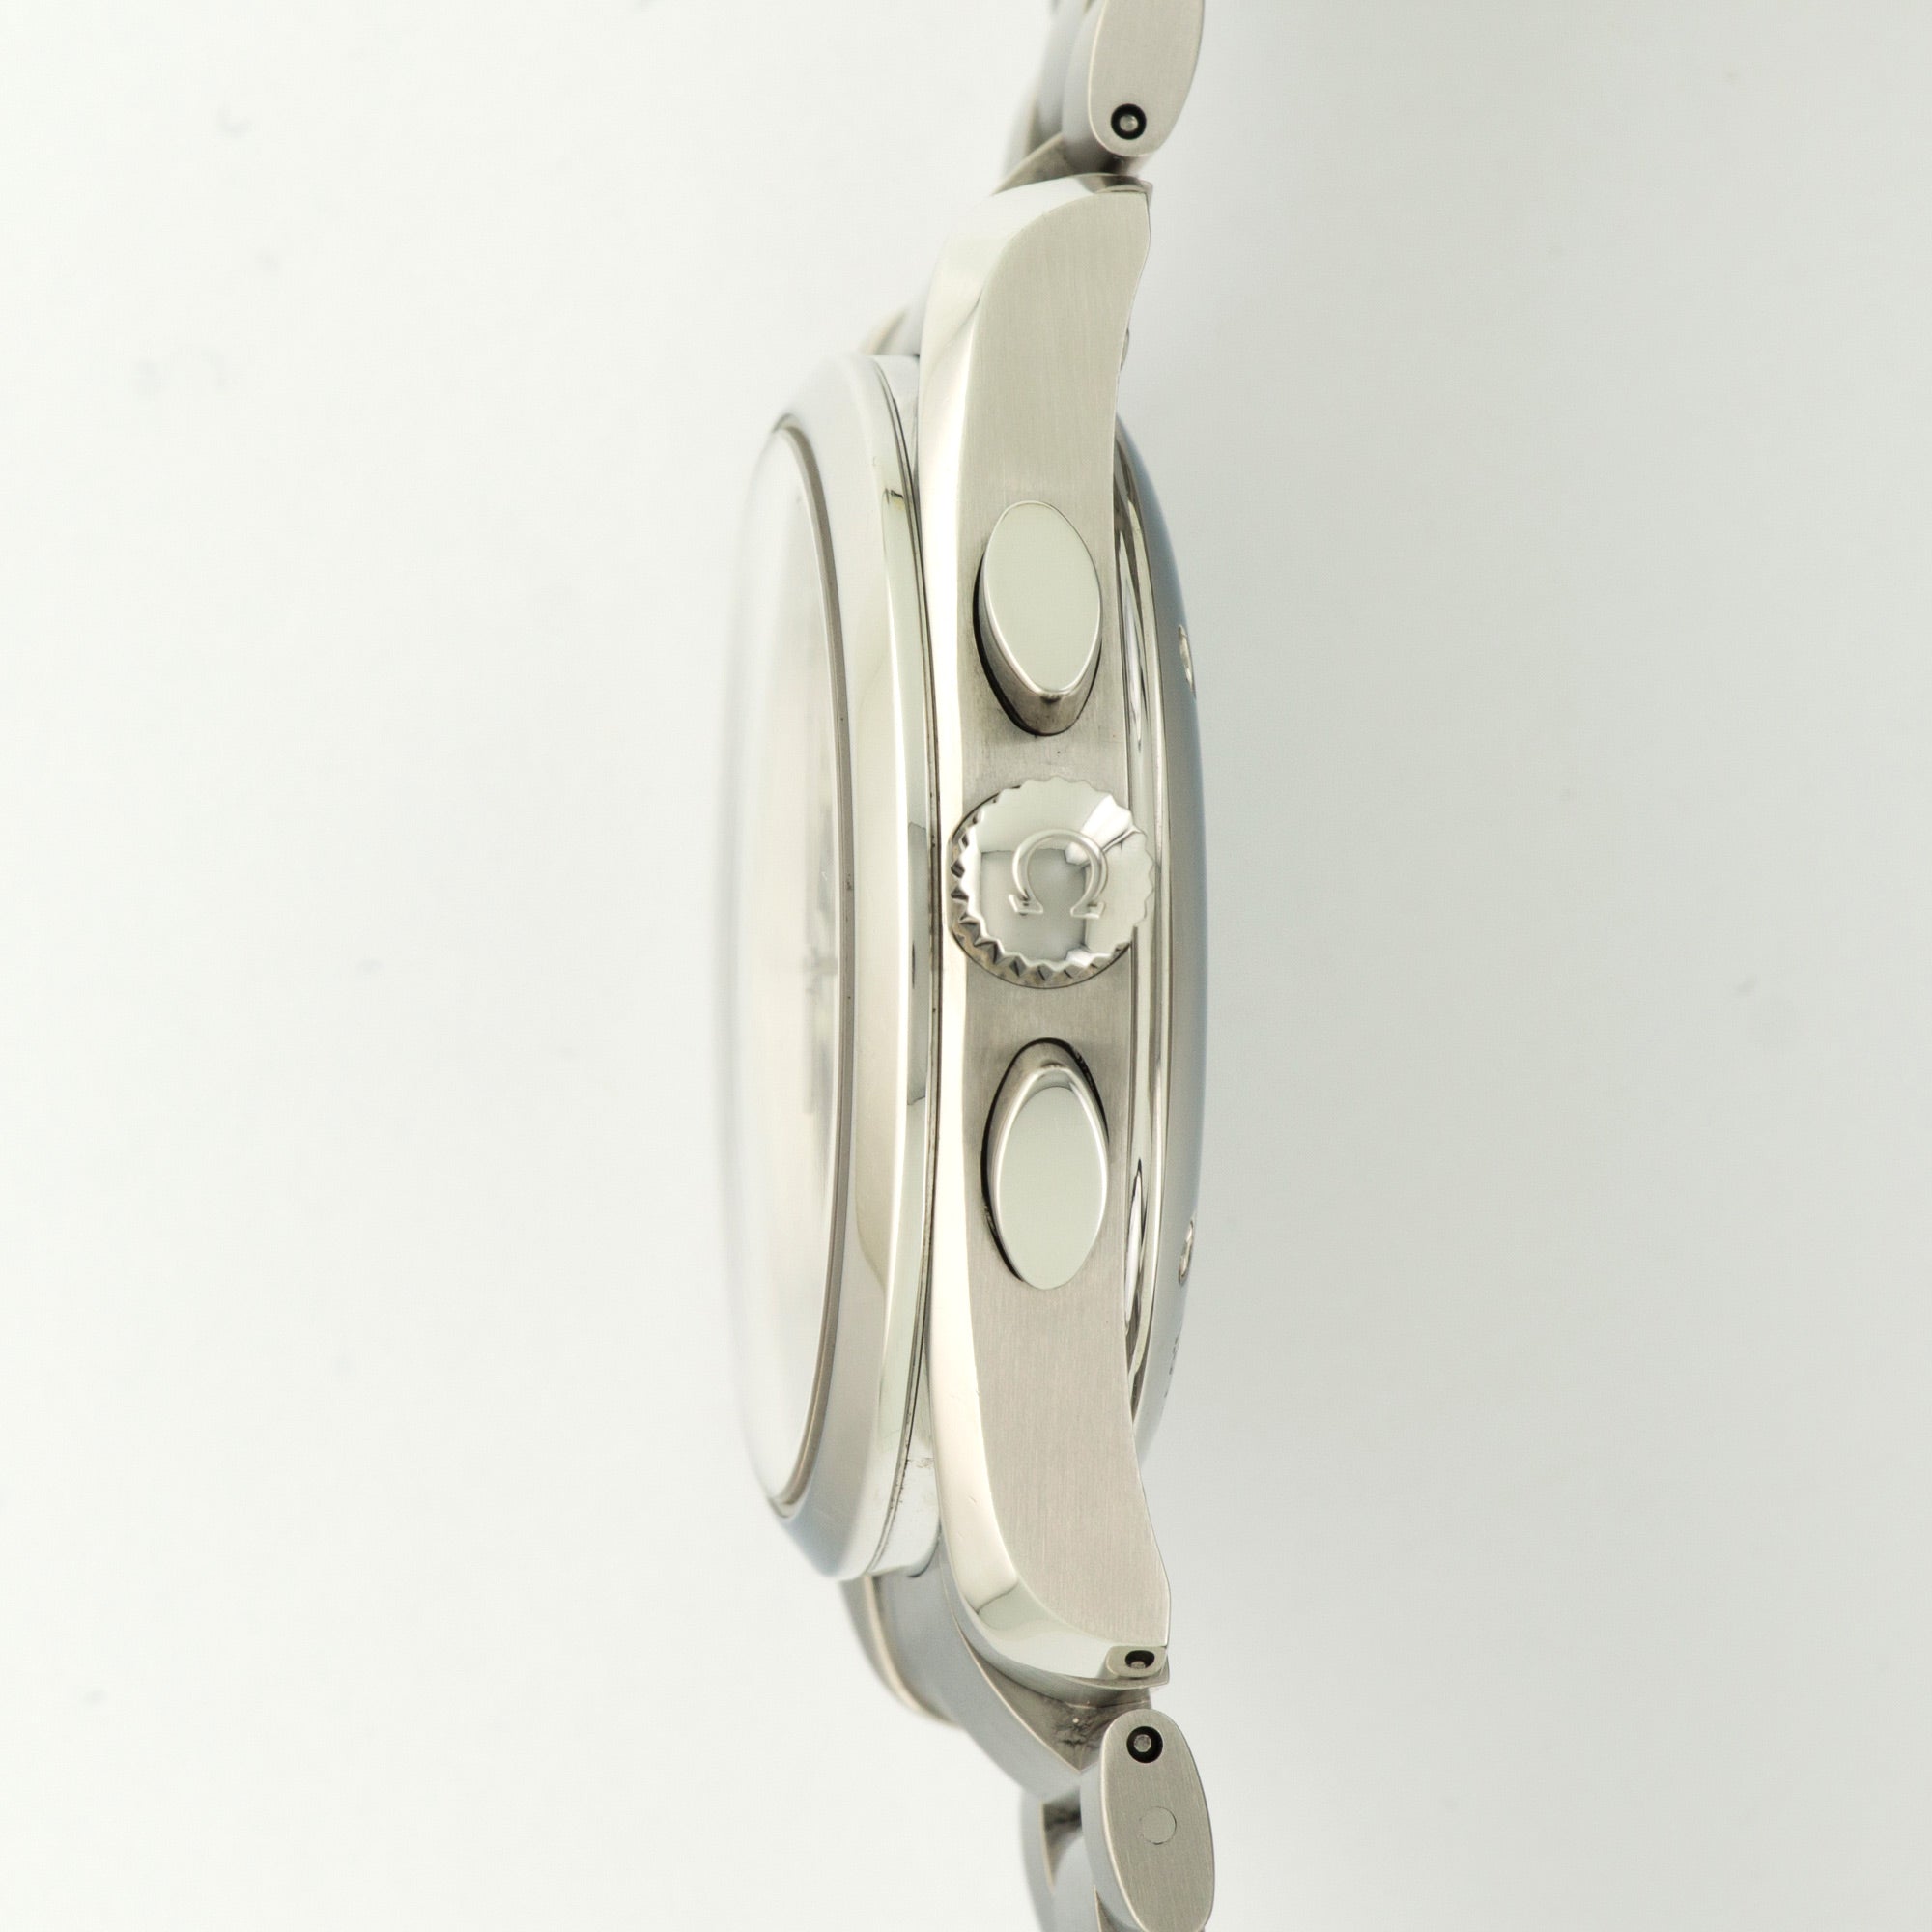 Omega - Omega Railmaster Automatic Chronograph Watch Ref. 2812.52.37 - The Keystone Watches